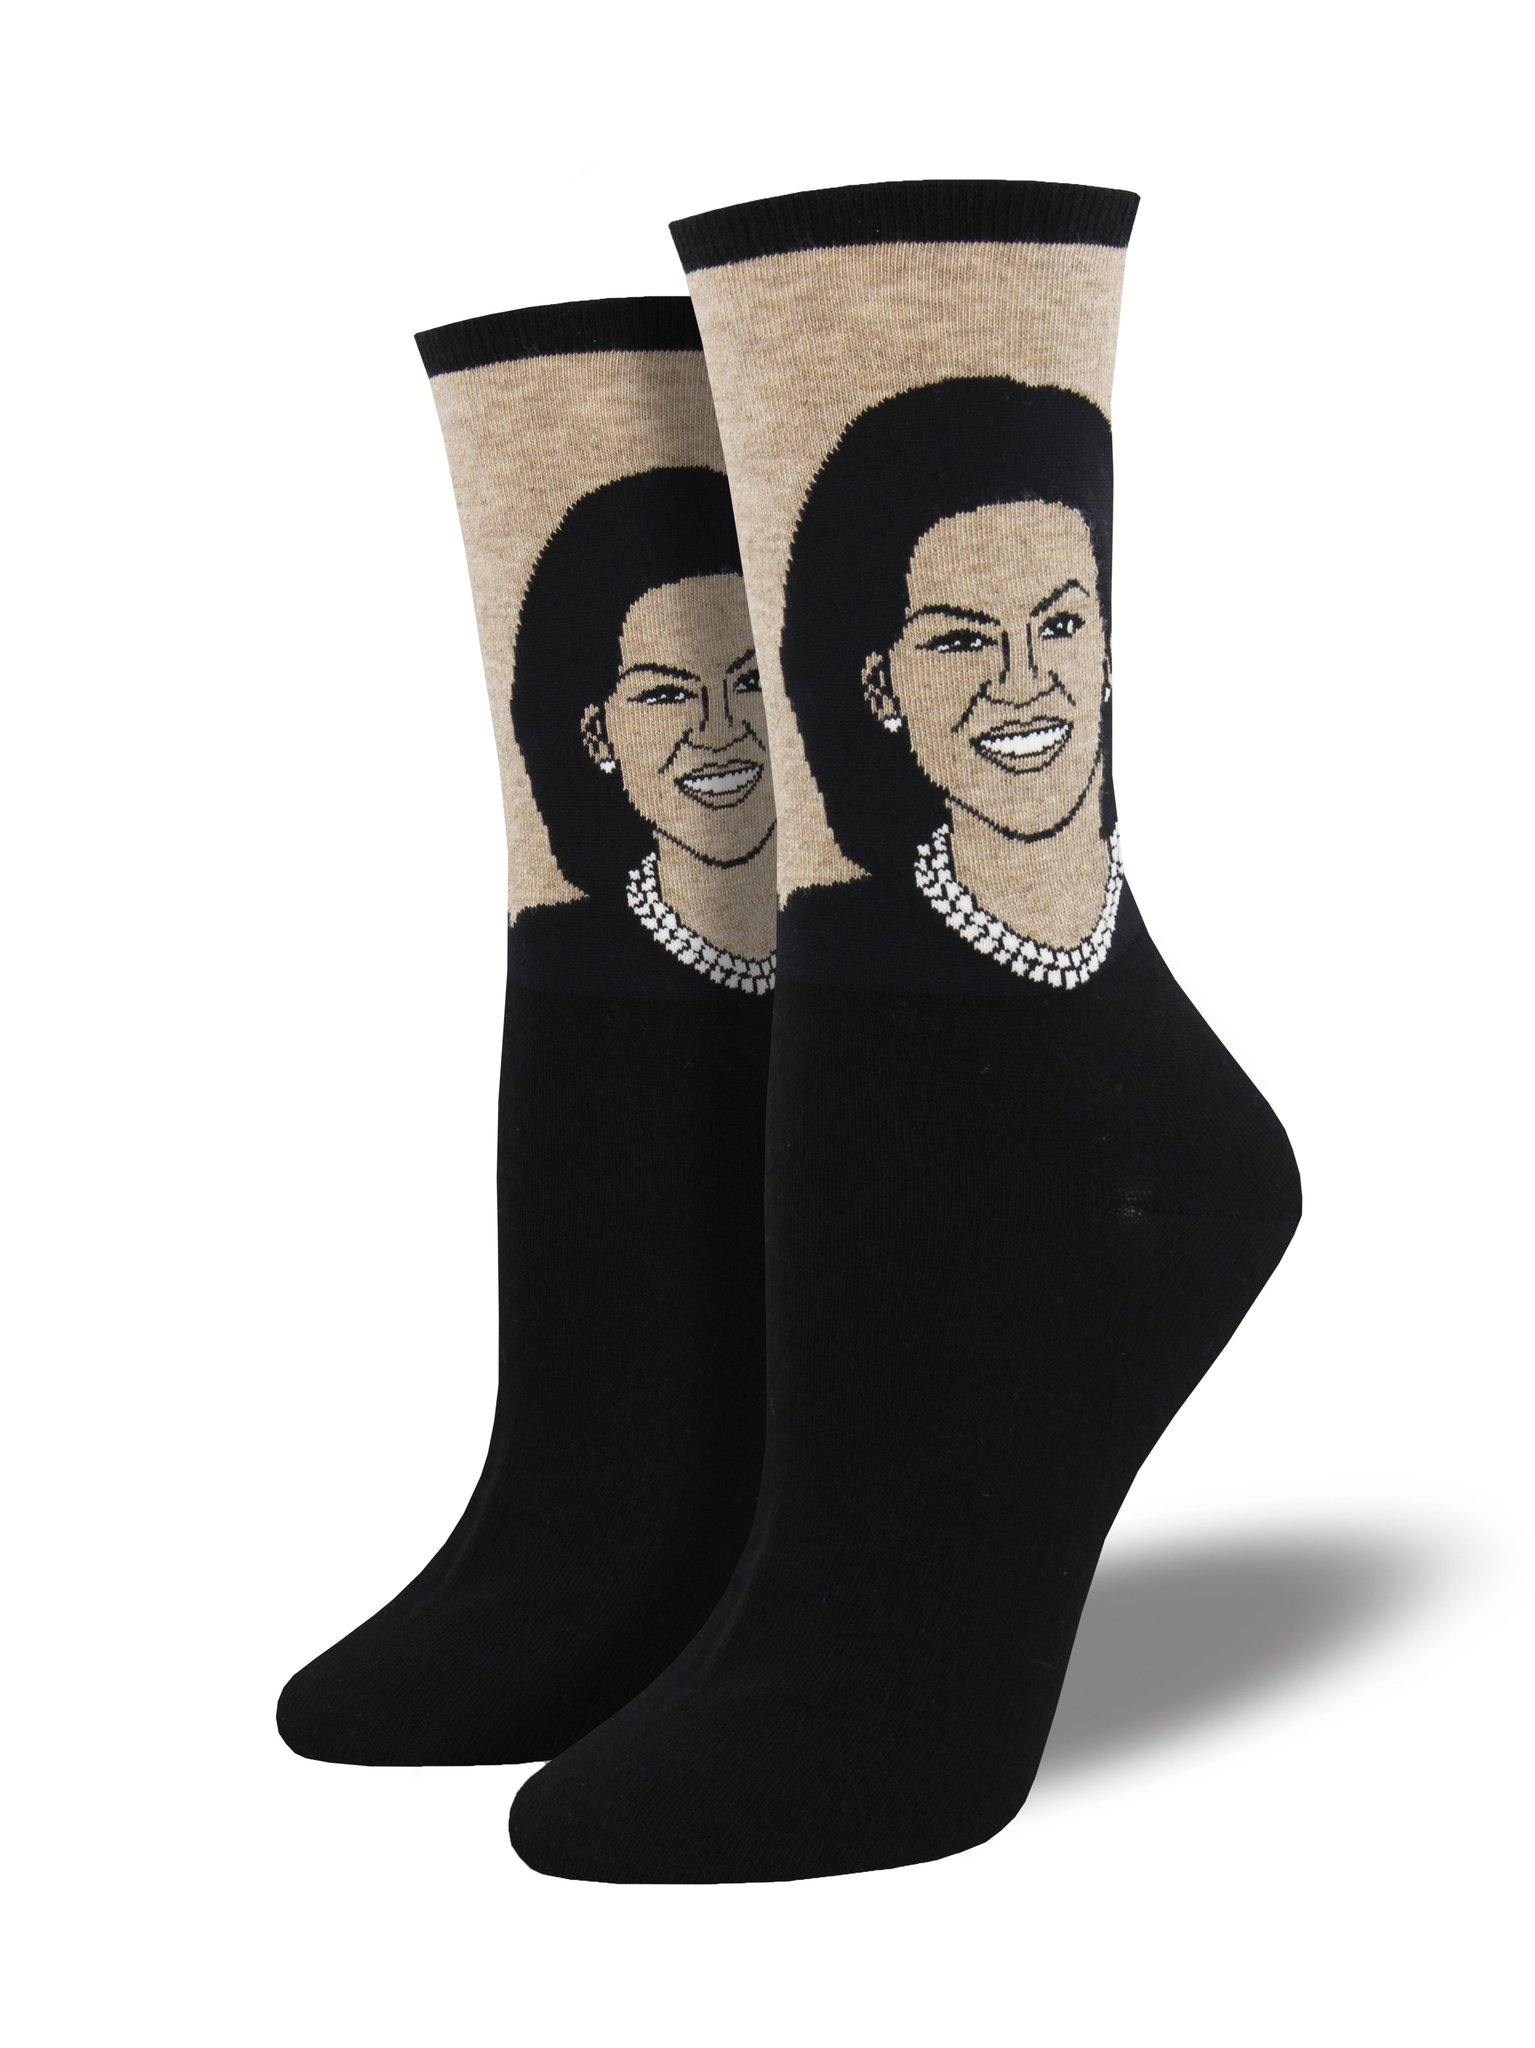 Michelle Obama Portrait Socks - Revival Phl